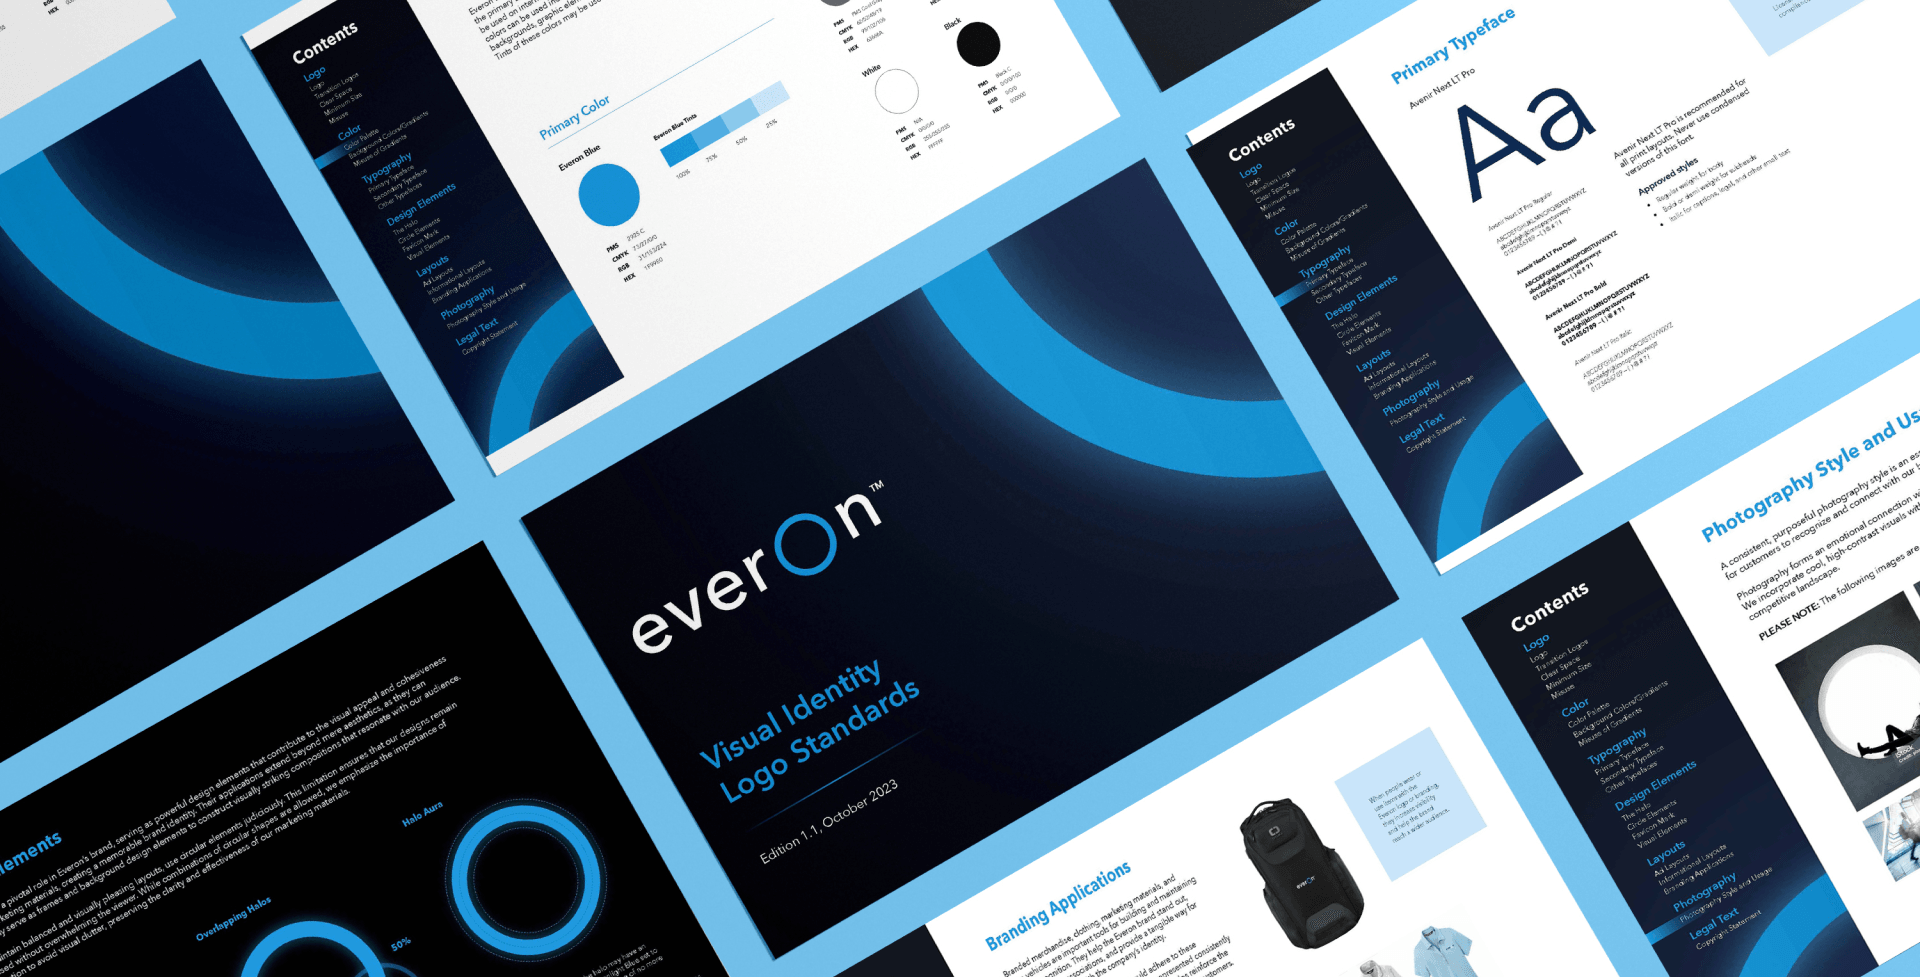 Everon visual identity logo standards.